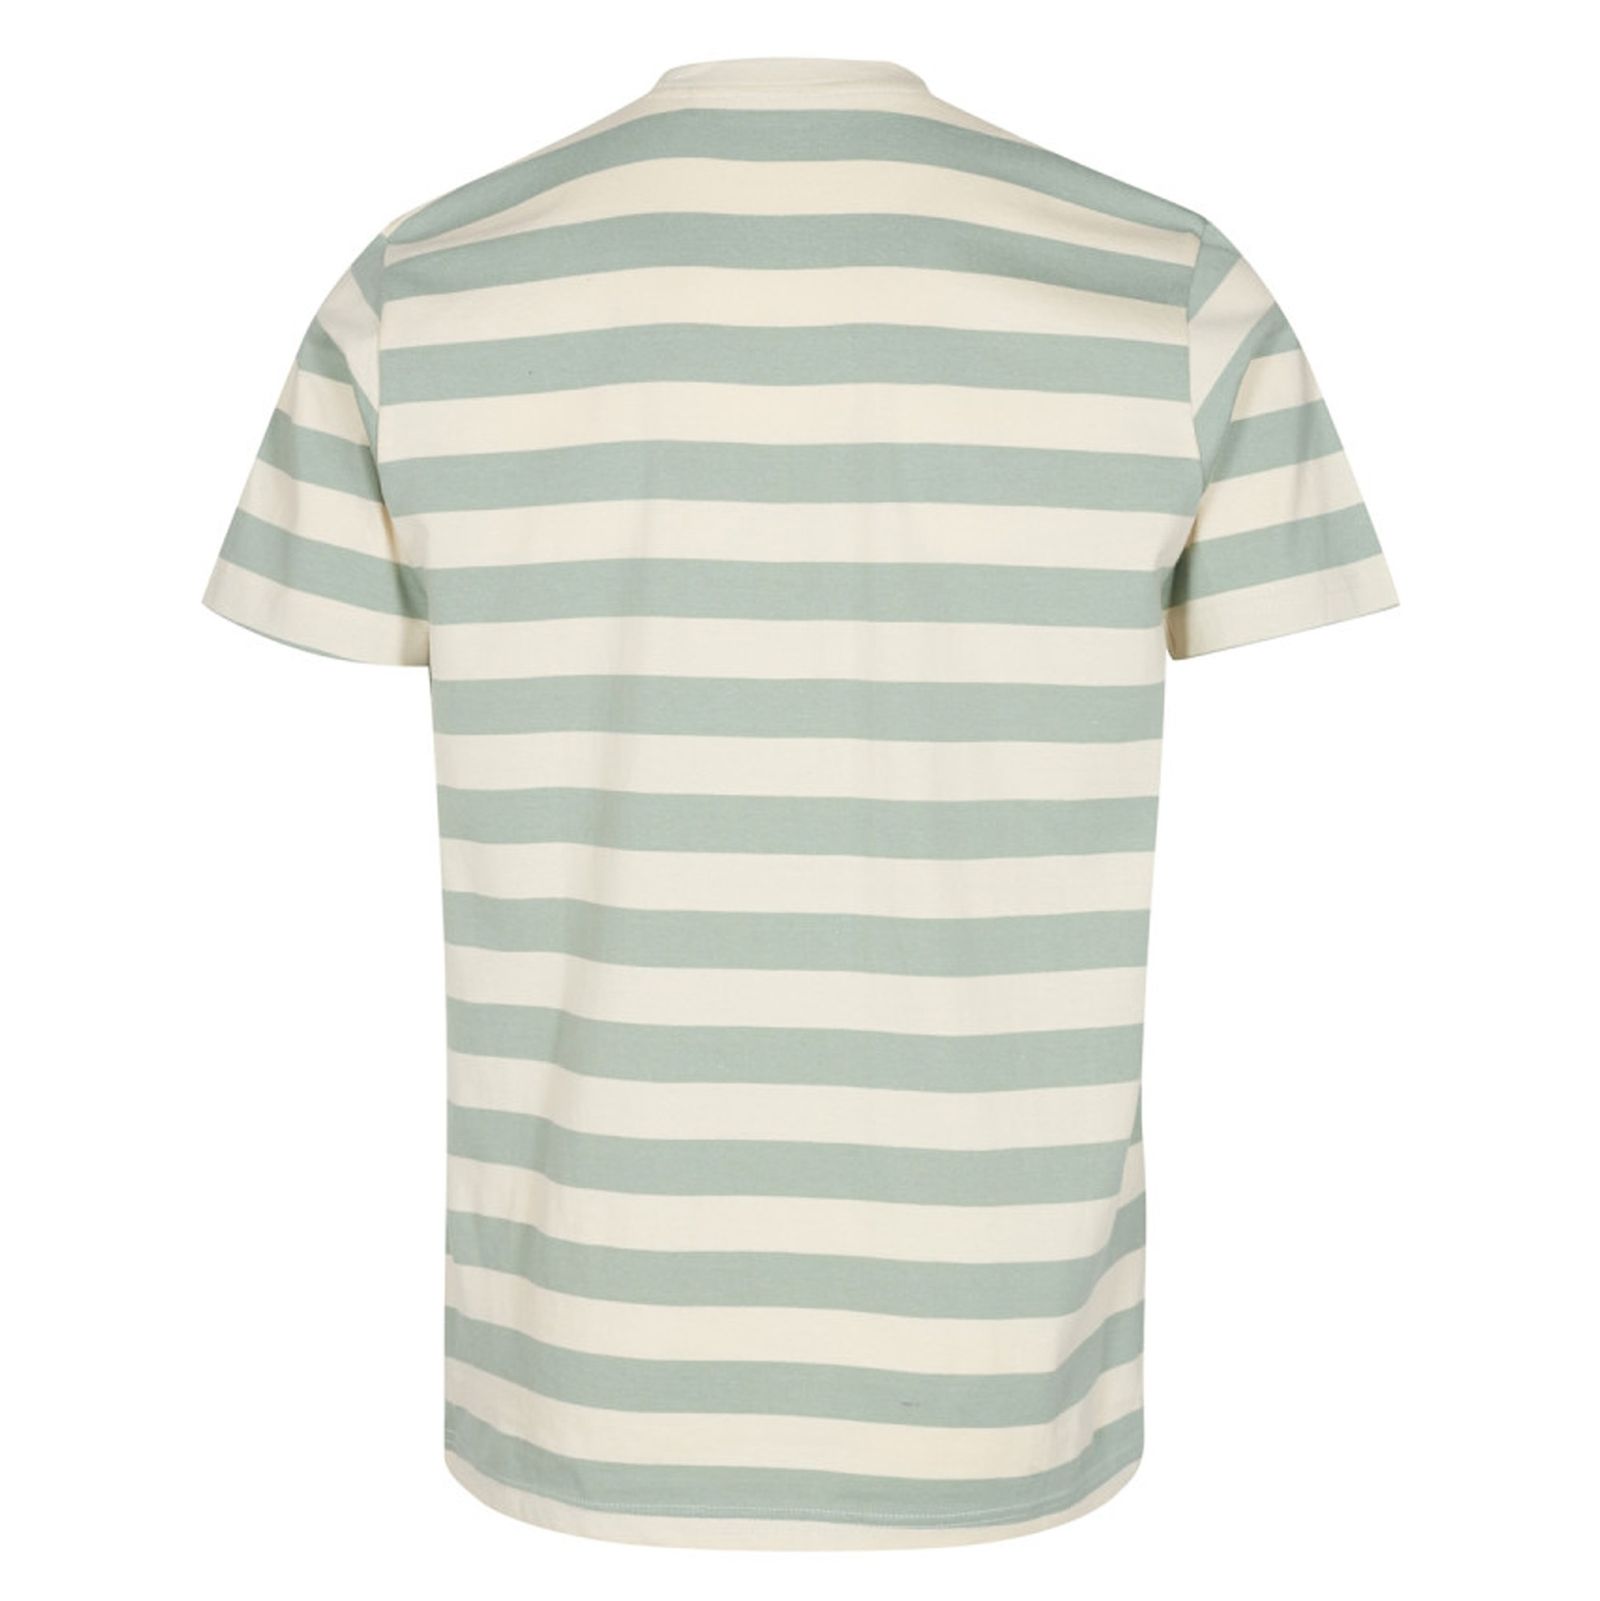 تی شرت نخی مردانه Thiago - مینیموم - سبز روشن - 3